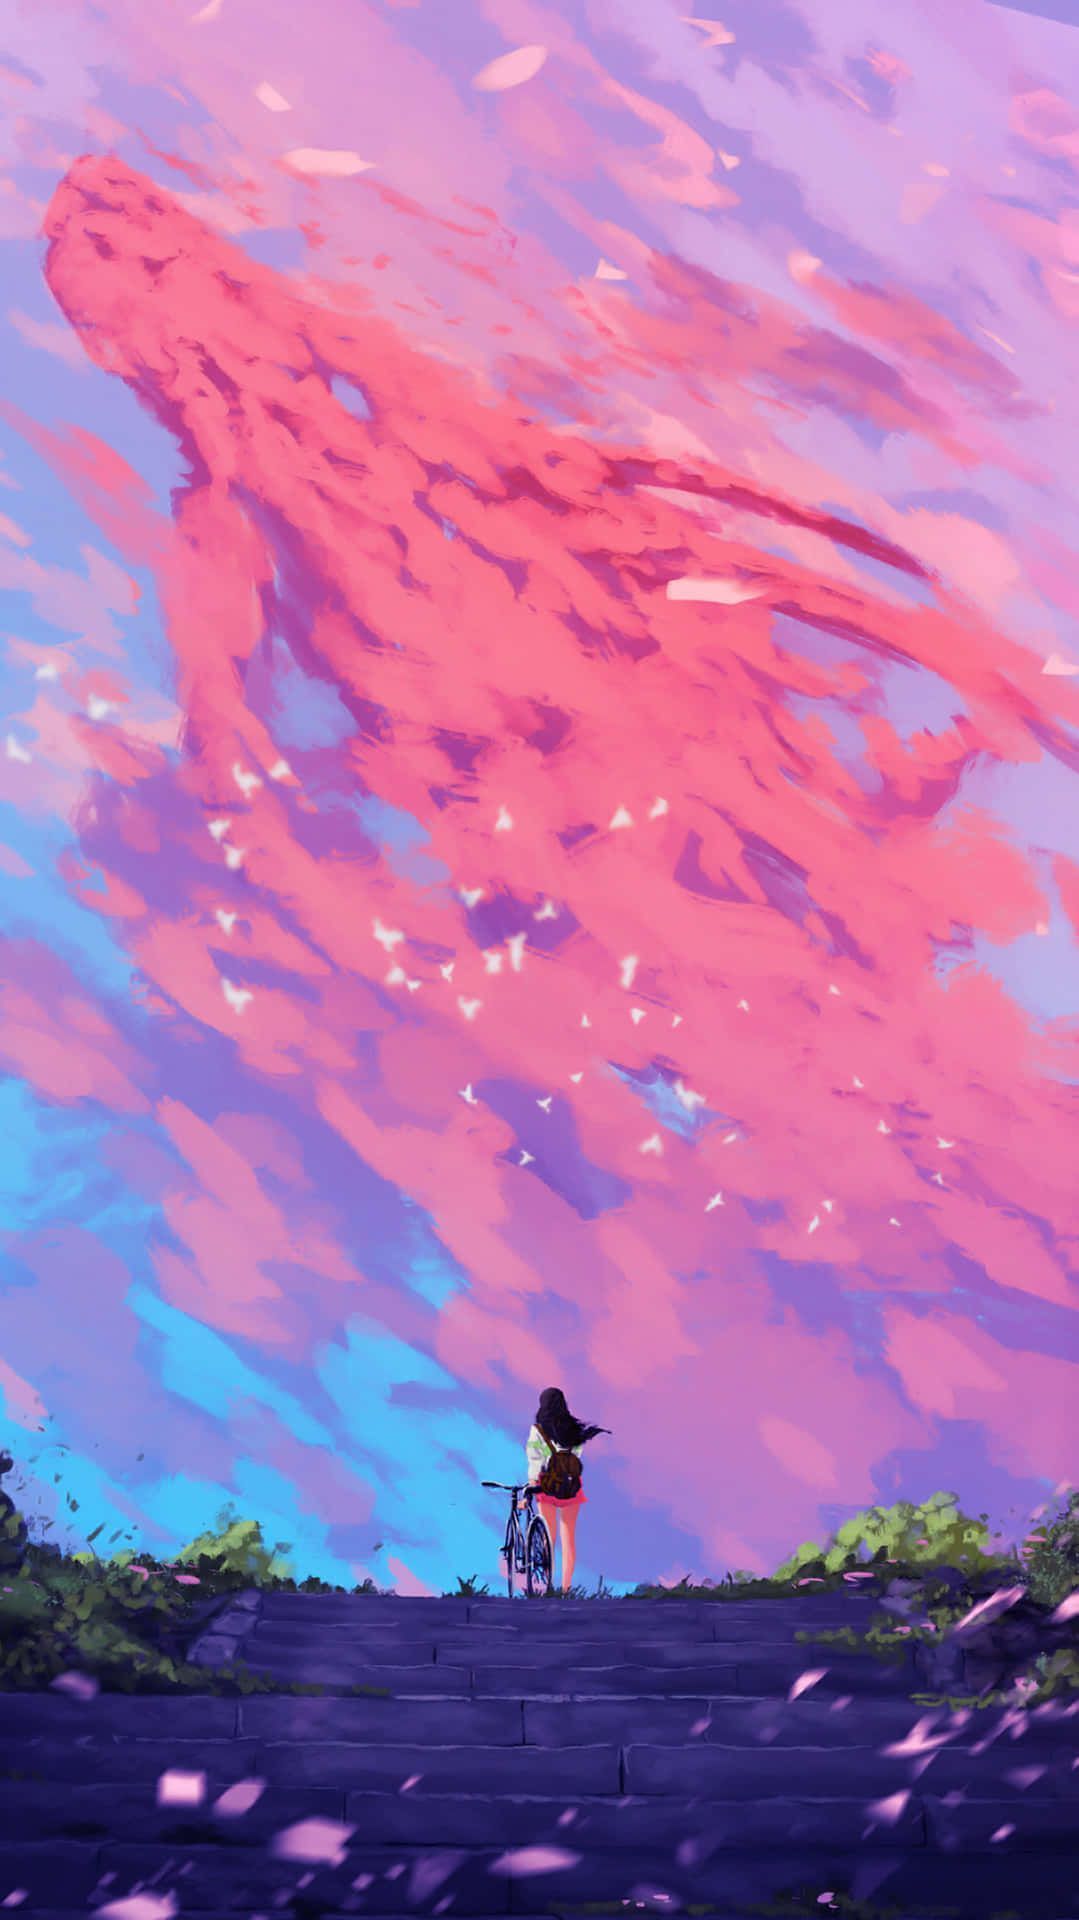 Free Pink Aesthetic Anime Phone Wallpaper Downloads, Pink Aesthetic Anime Phone Wallpaper for FREE